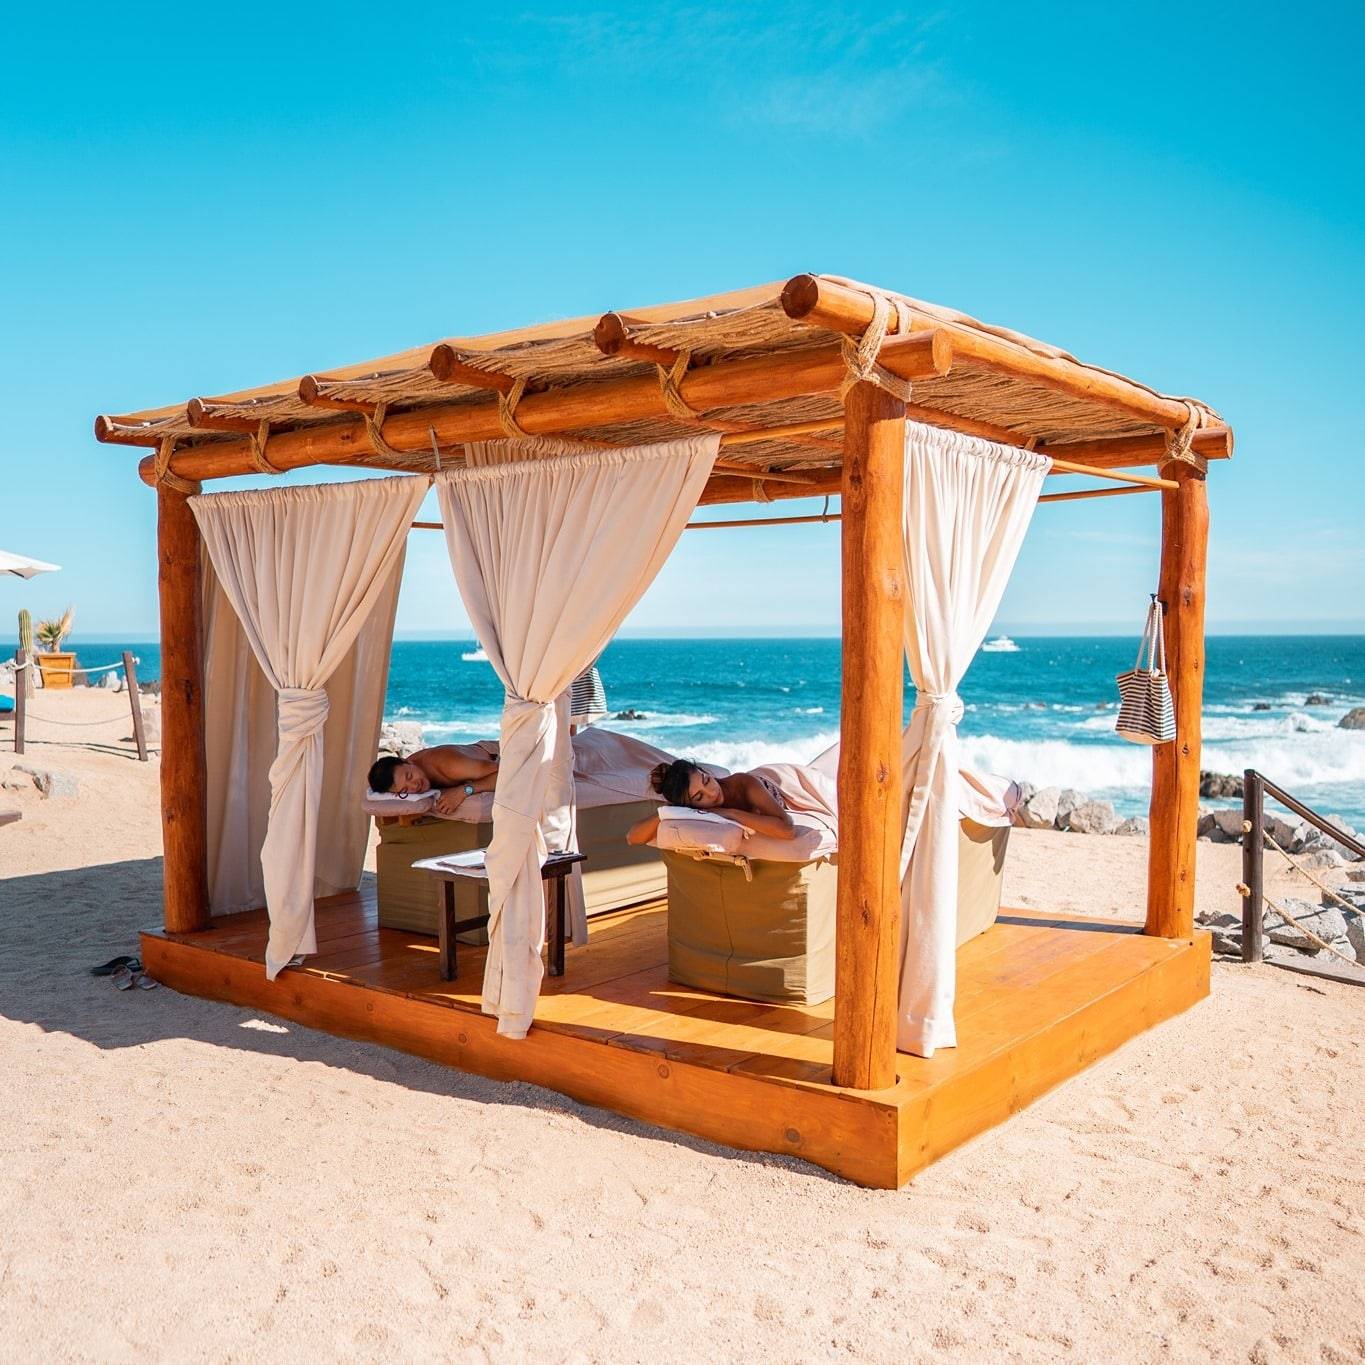 Luxurious Baja Resorts Nominated for Travel + Leisure Awards